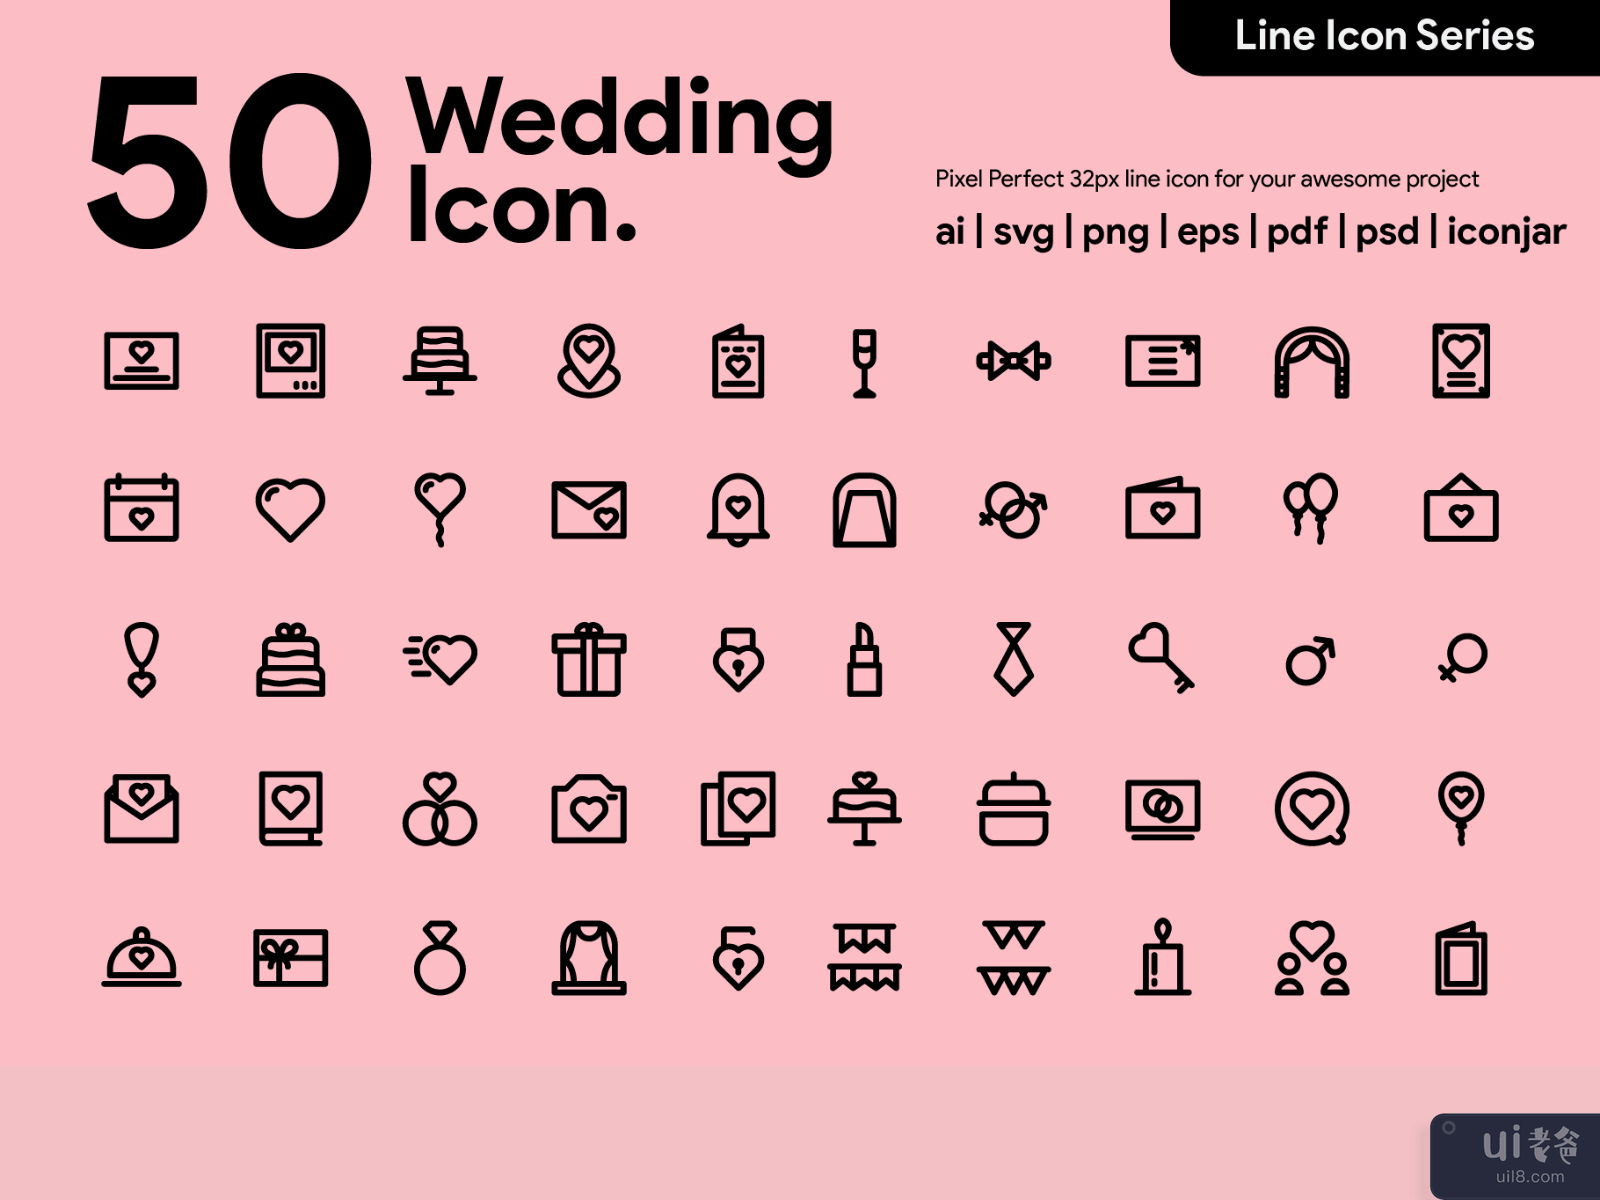 Kawaicon - 50 Wedding Line Icons